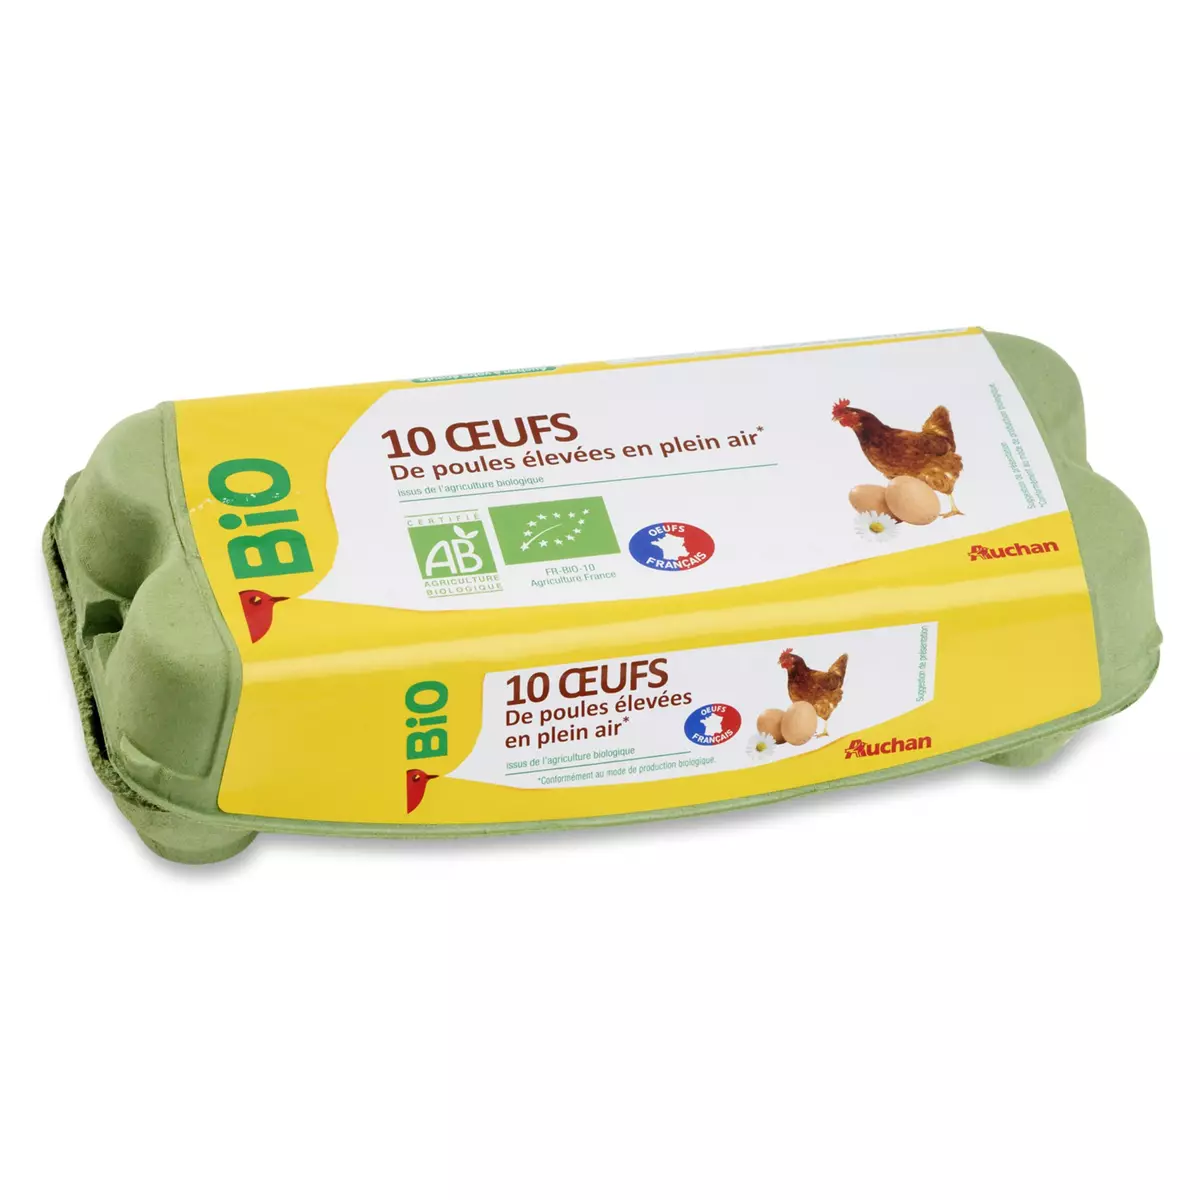 AUCHAN Auchan bio oeufs x10 10 œufs